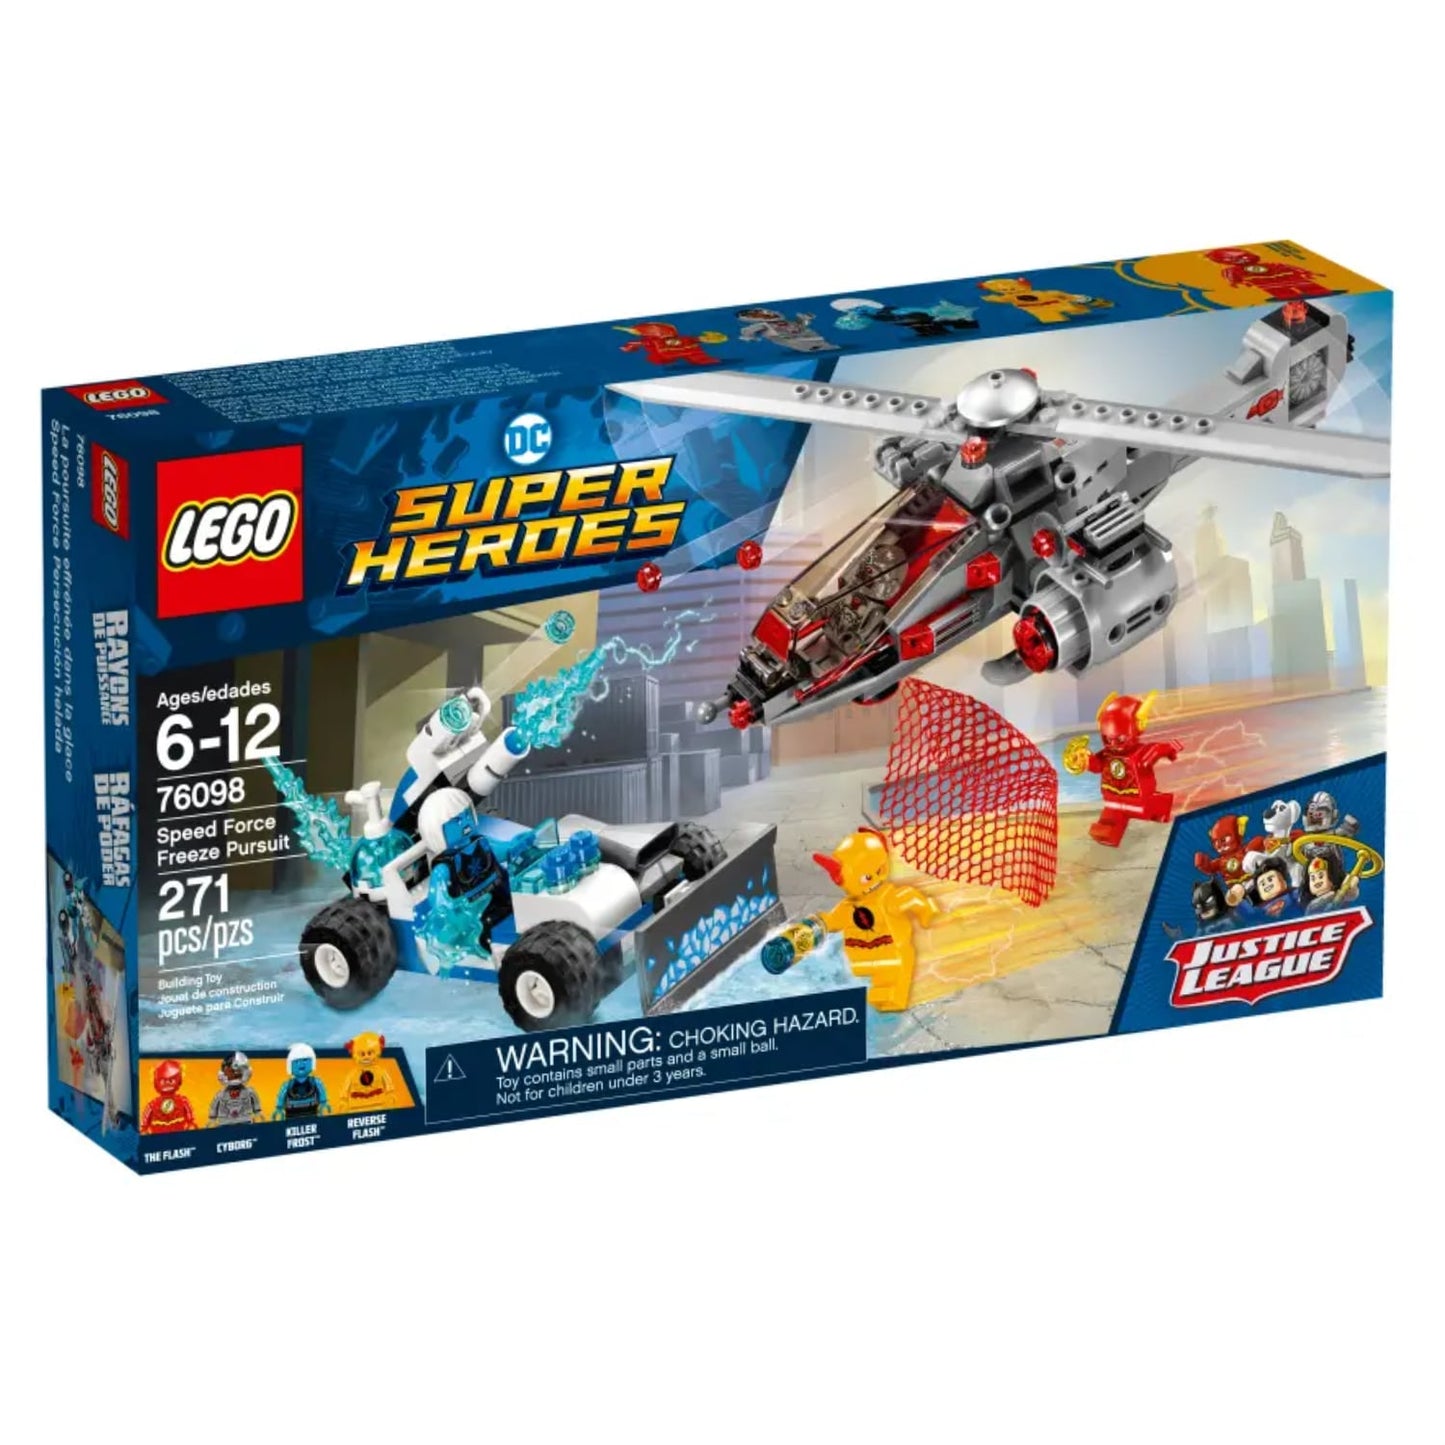 Lego 76098 DC Super Heroes Justice League Speed Force Freeze Pursuit